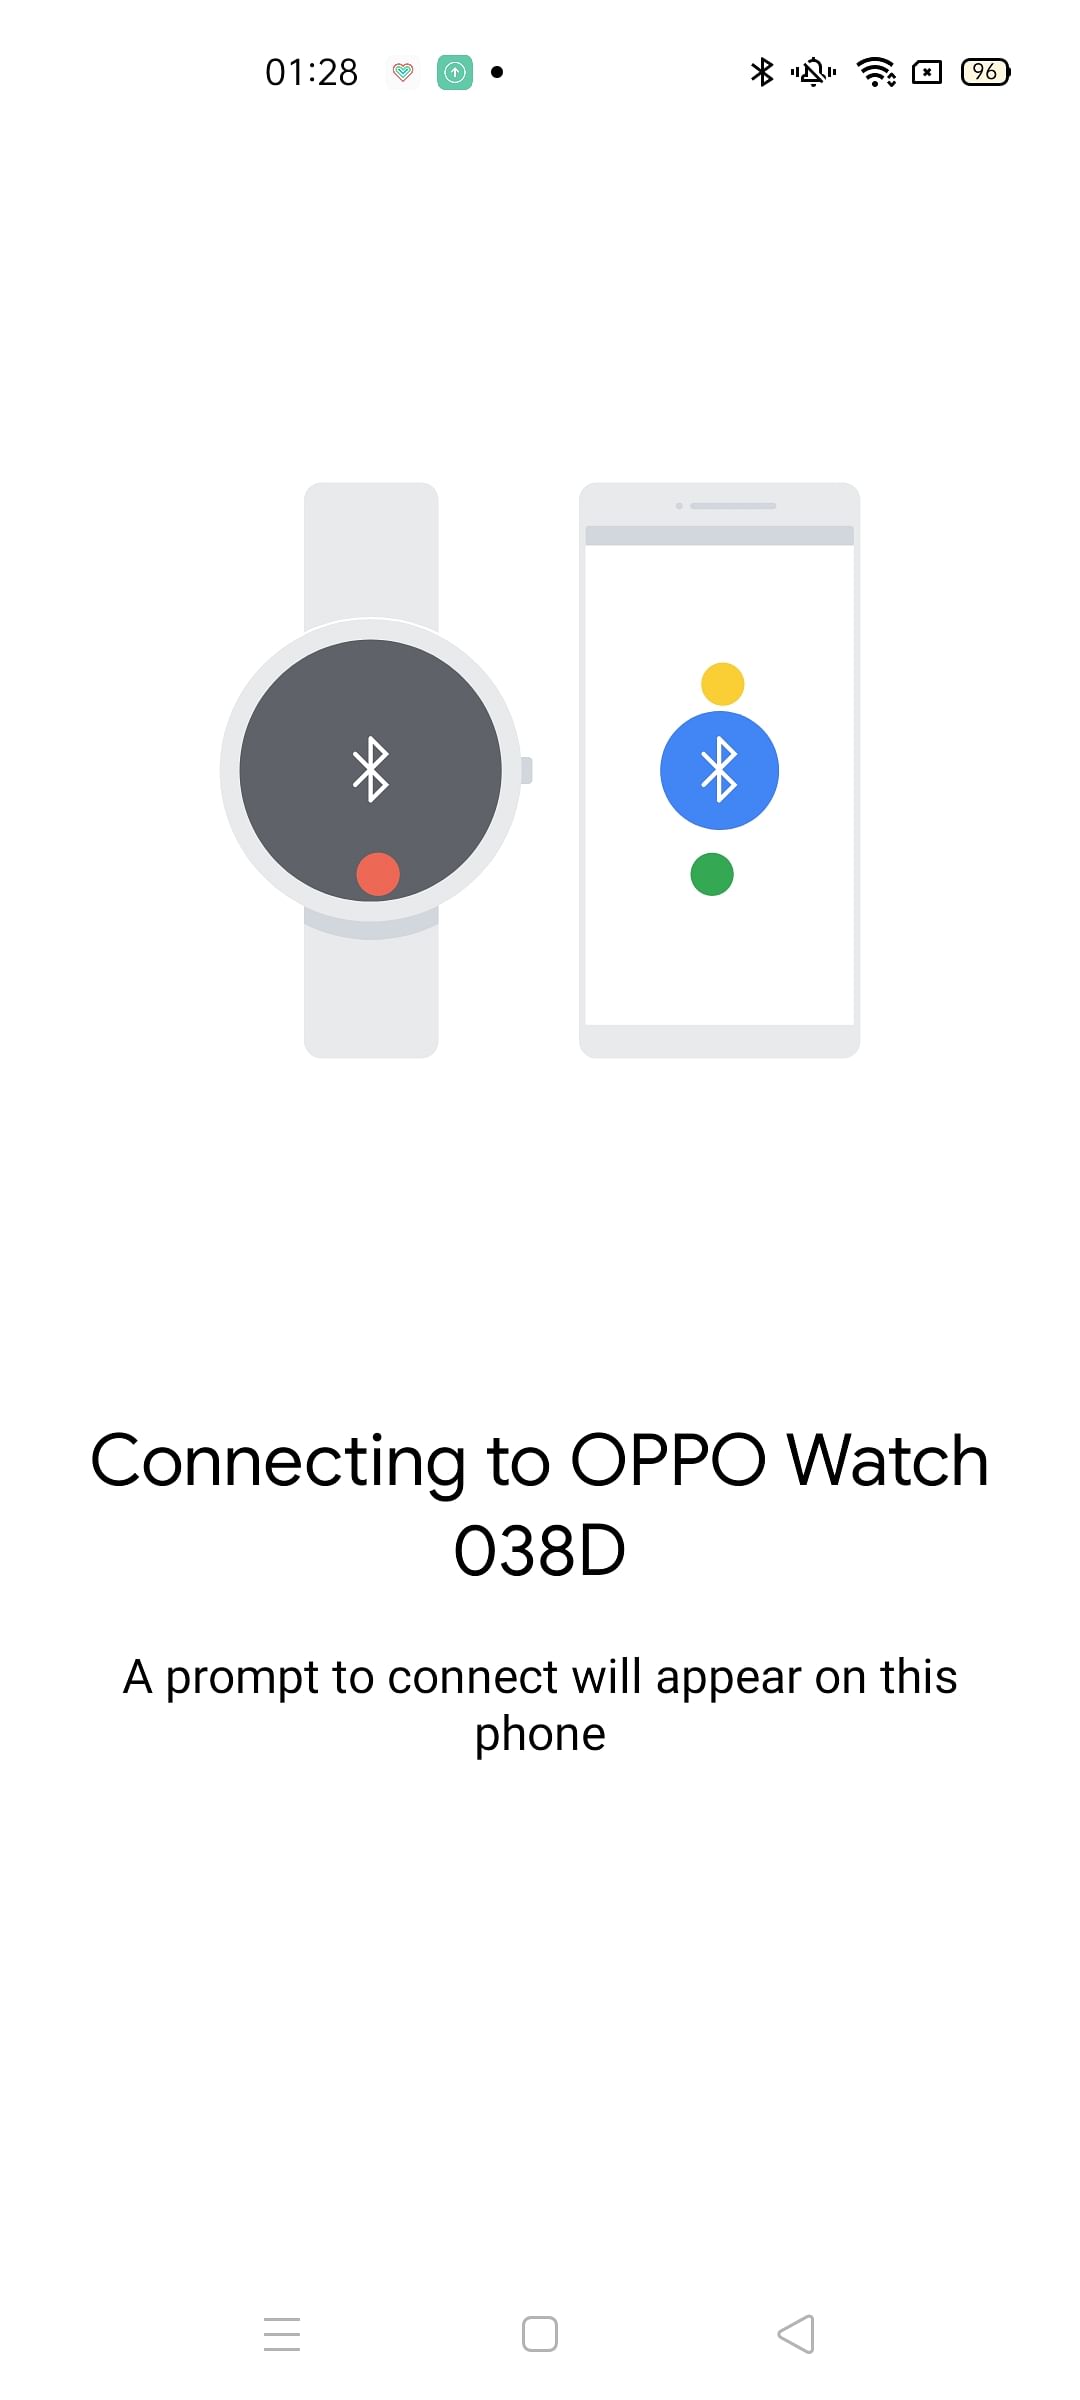 Cara menyambungkan OPPO Watch ke Ponsel Android